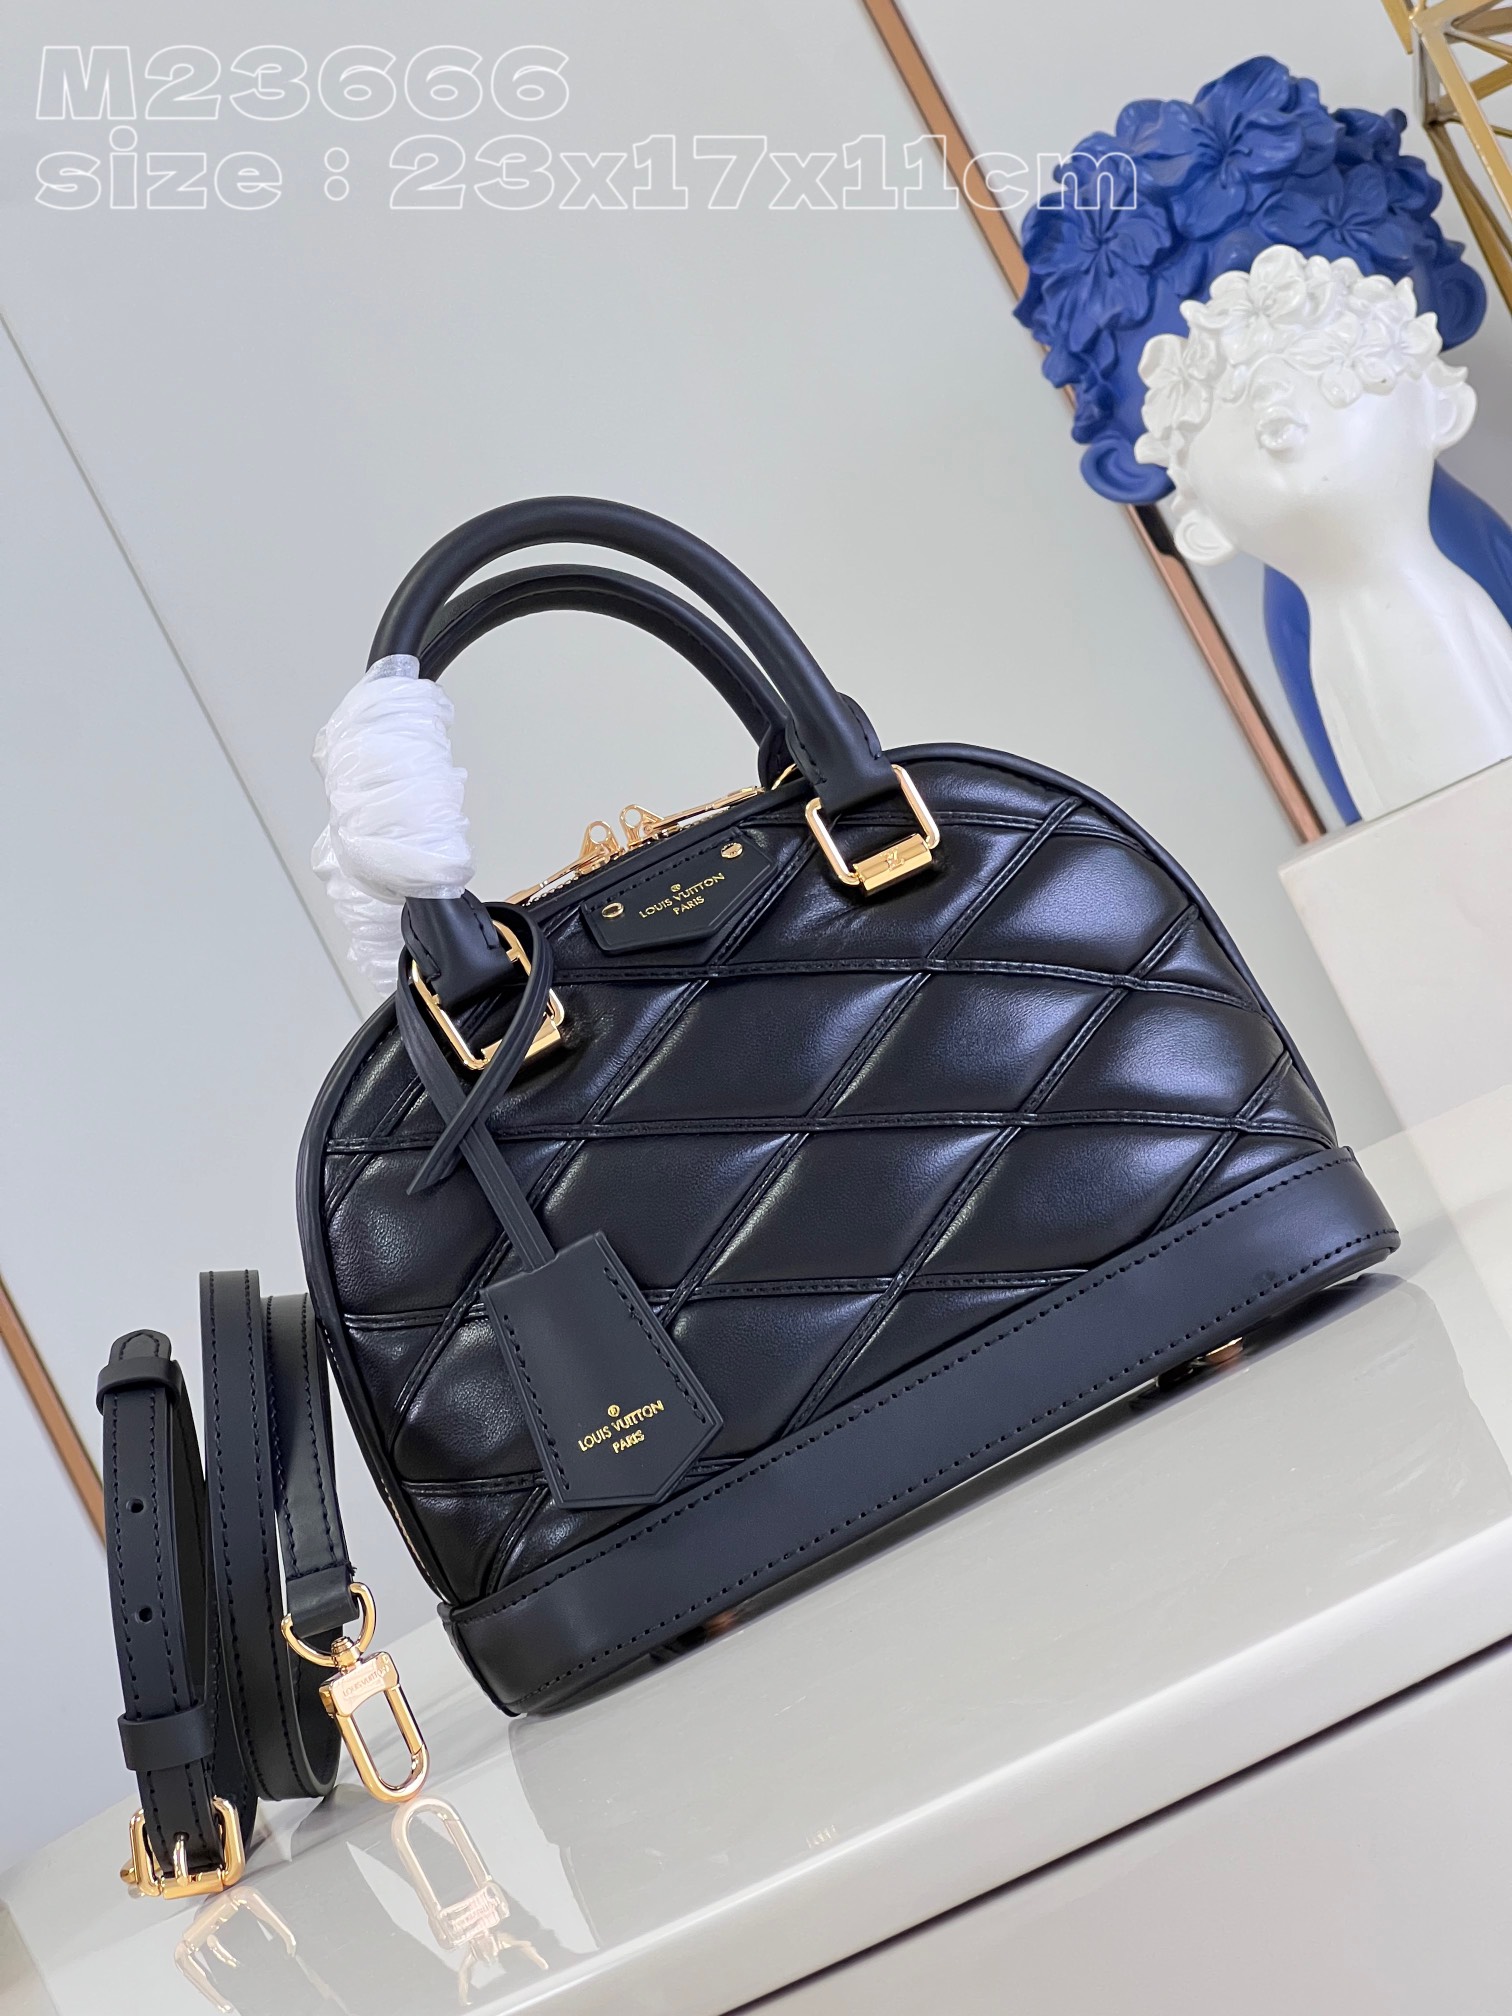 Where should I buy replica Louis Vuitton LV Alma BB Bags Handbags Cheap Replica Black Sheepskin M23666